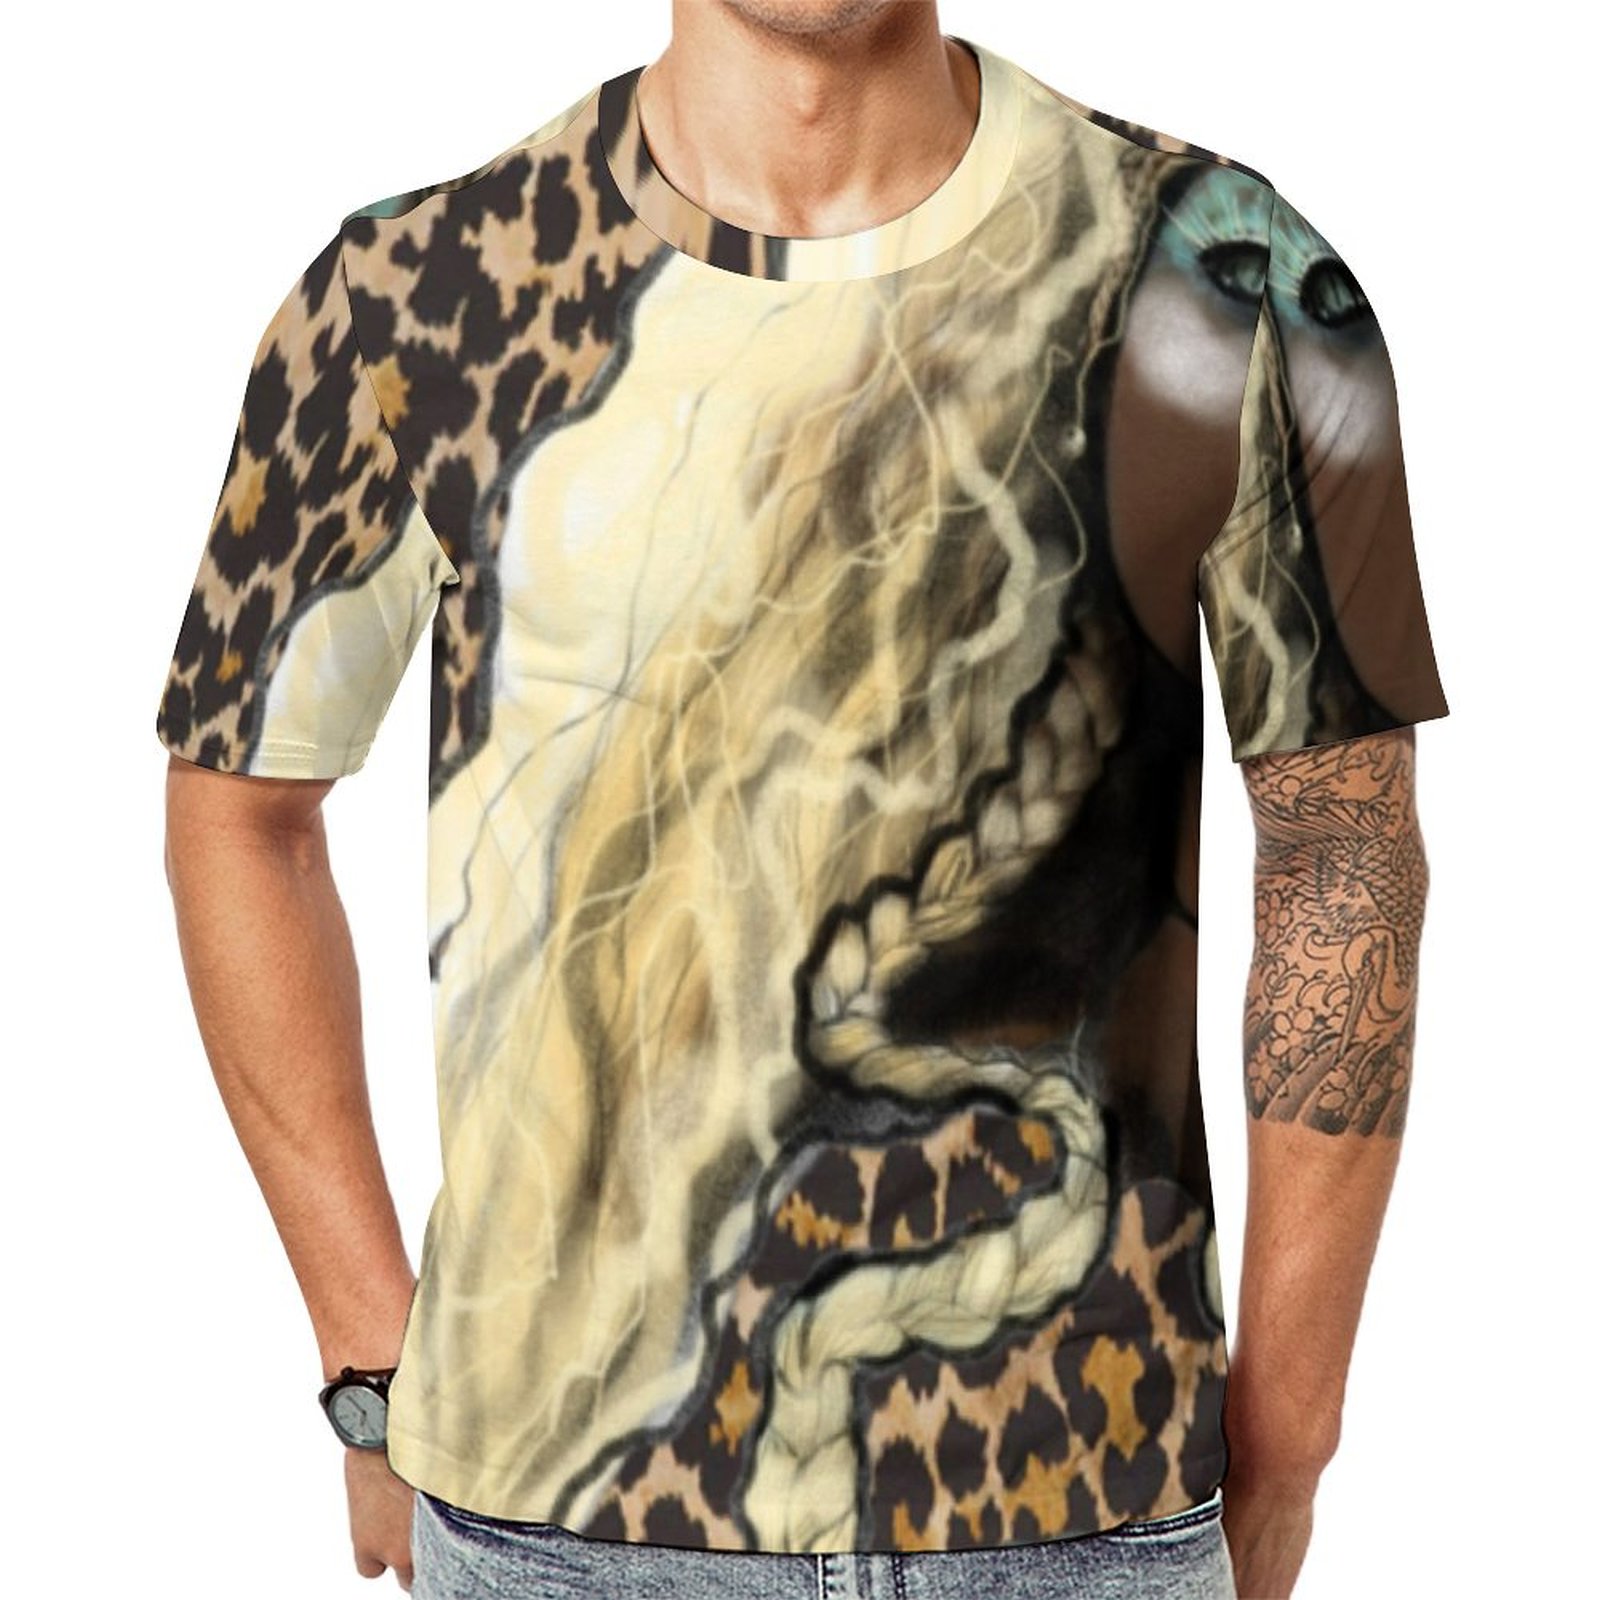 Cheetah Girl Leopard Print Short Sleeve Print Unisex Tshirt Summer Casual Tees for Men and Women Coolcoshirts